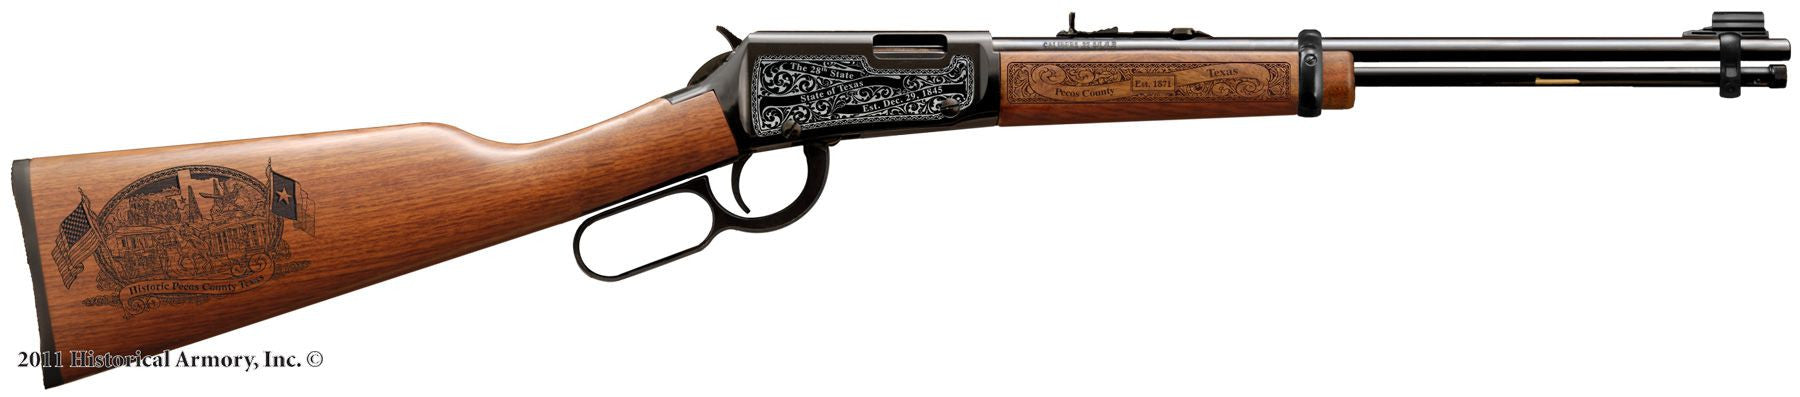 pecos county texas engraved rifle h001